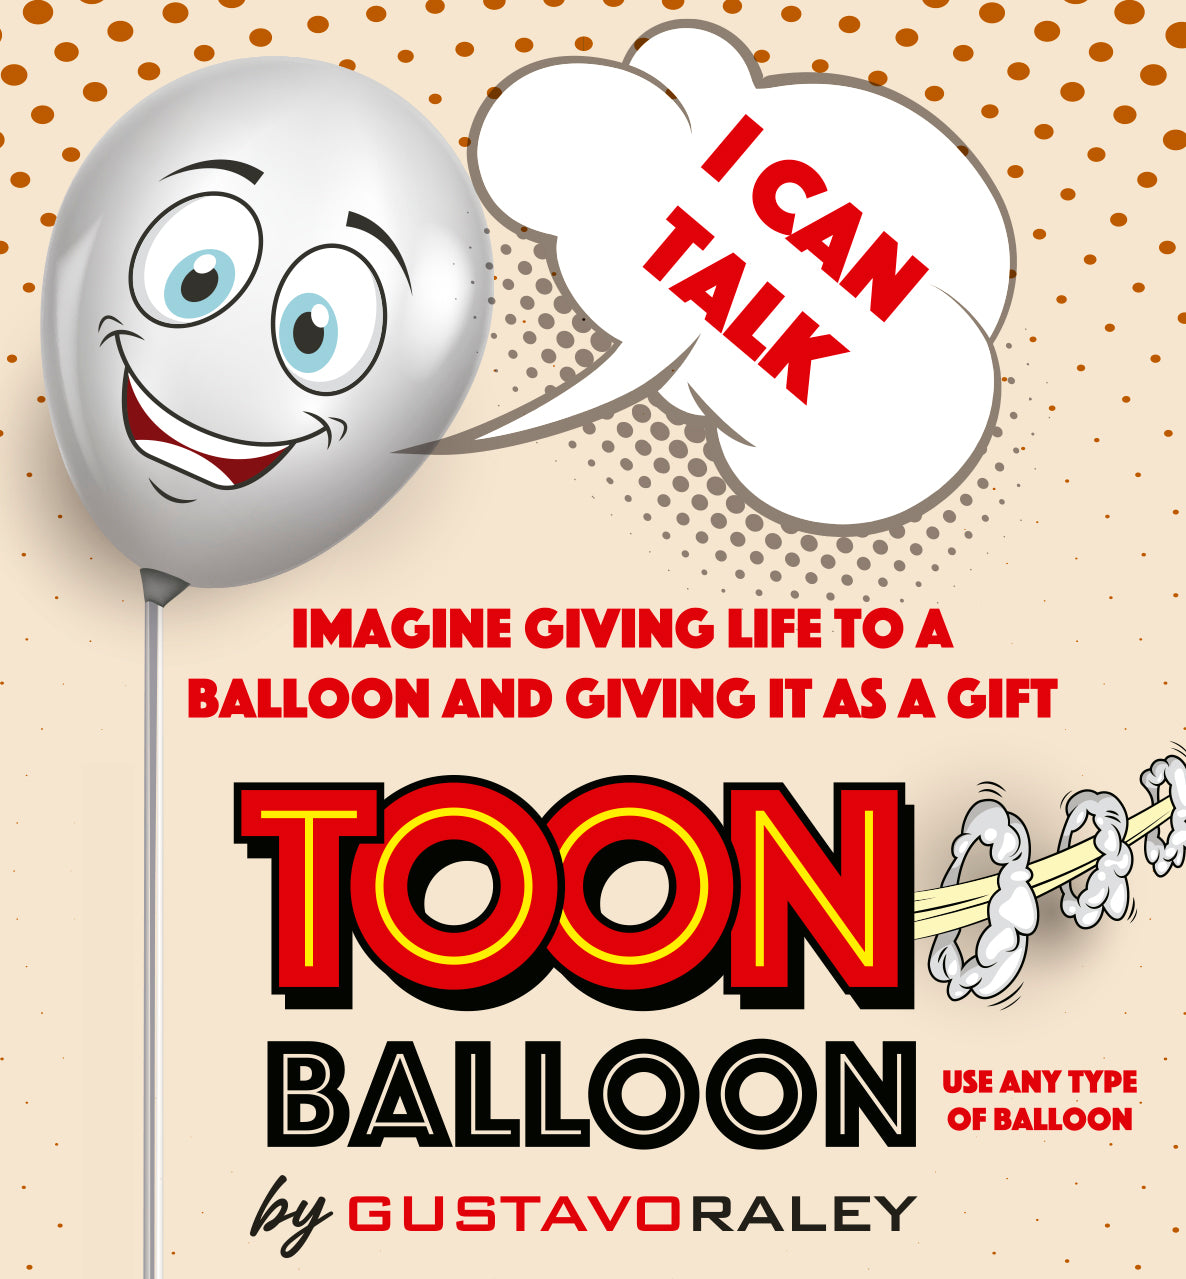 Toon Balloon by Gustavo Raley